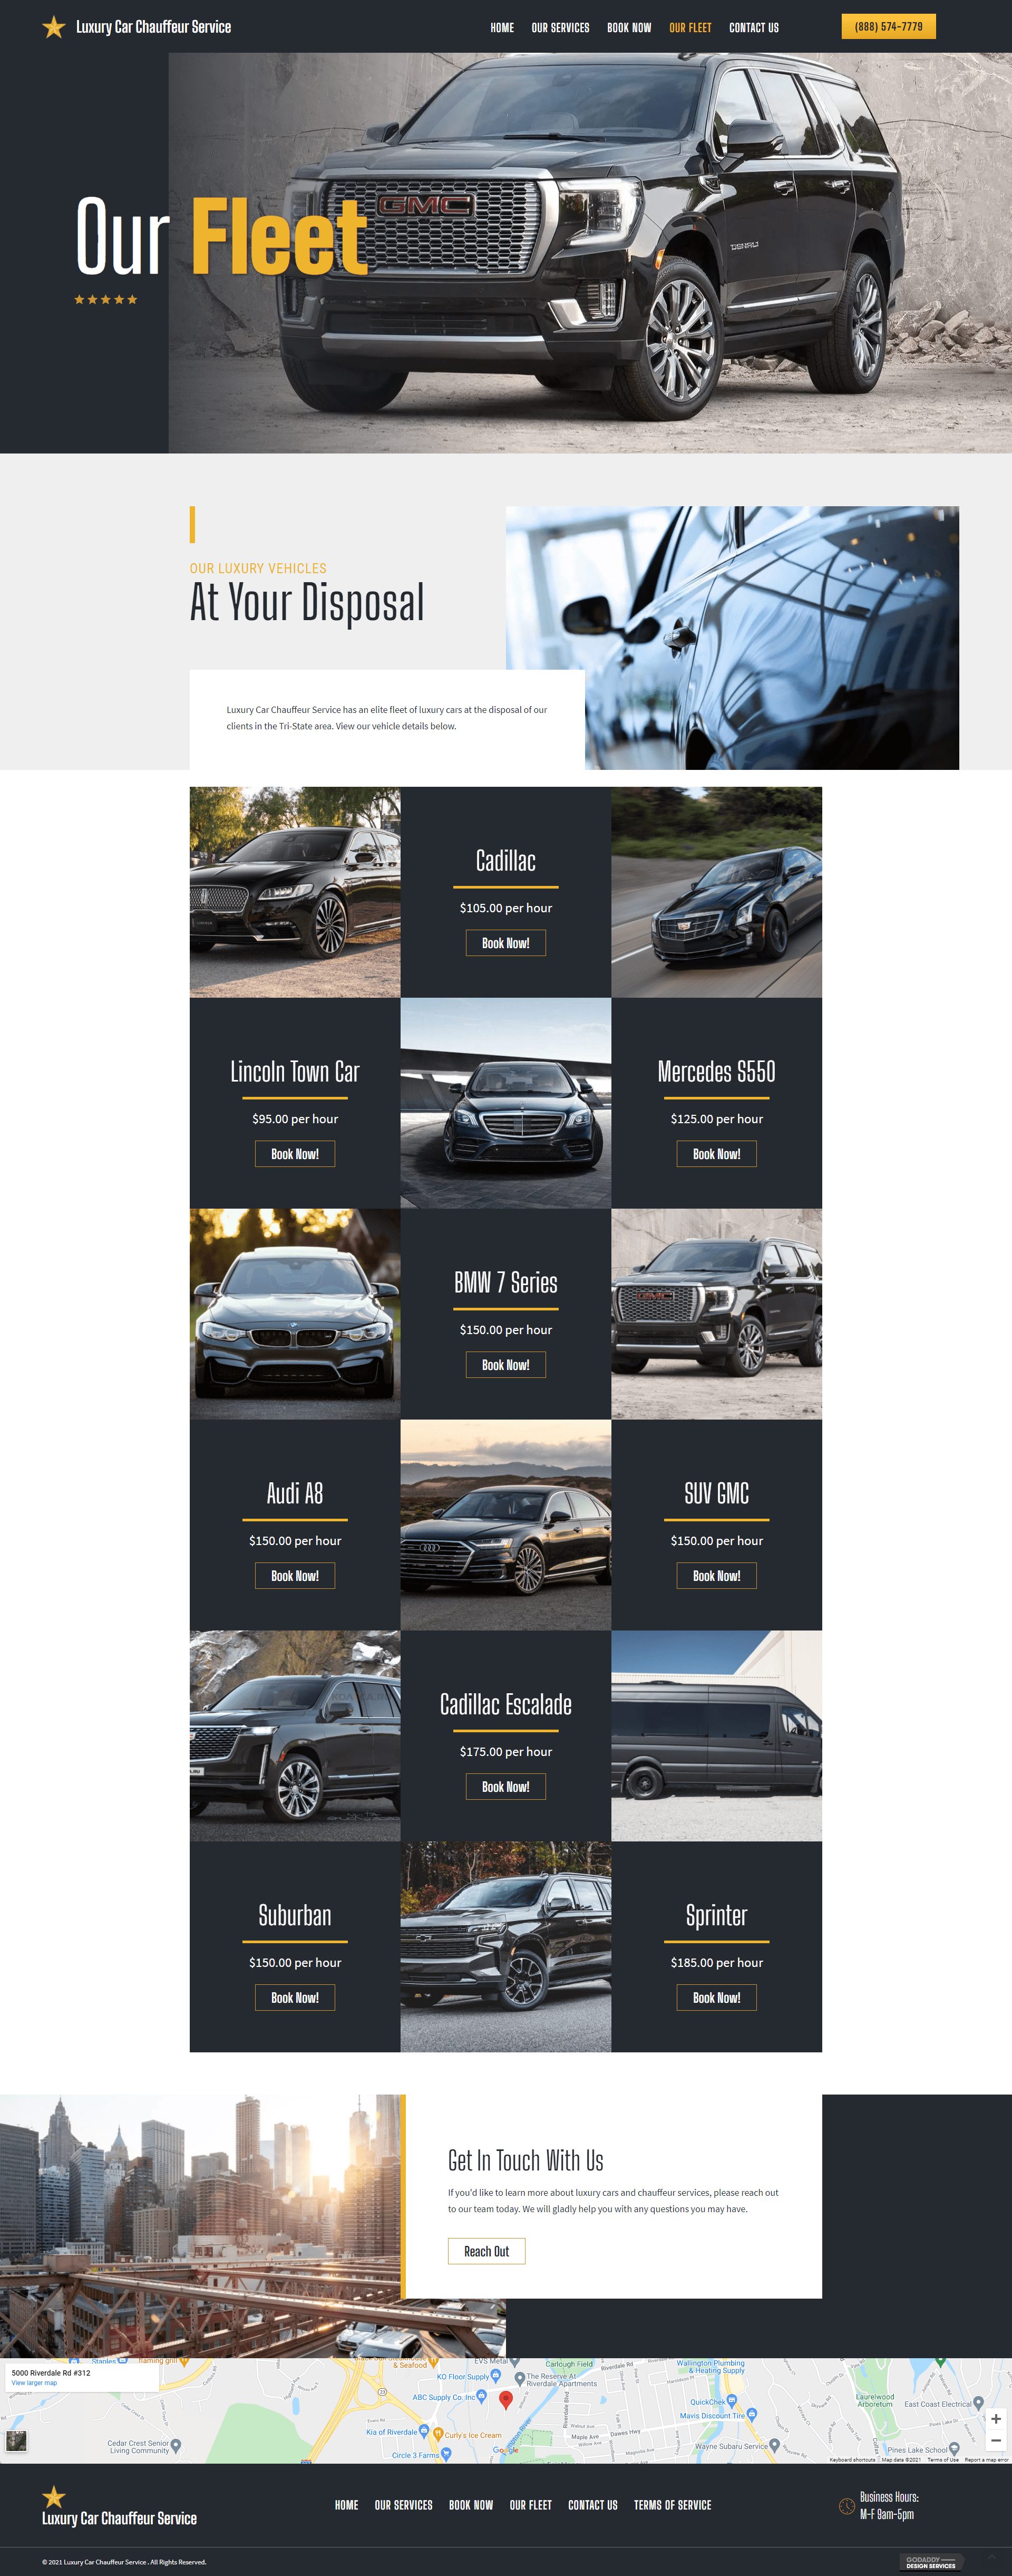 Luxury Car Chauffeur Service Fleet